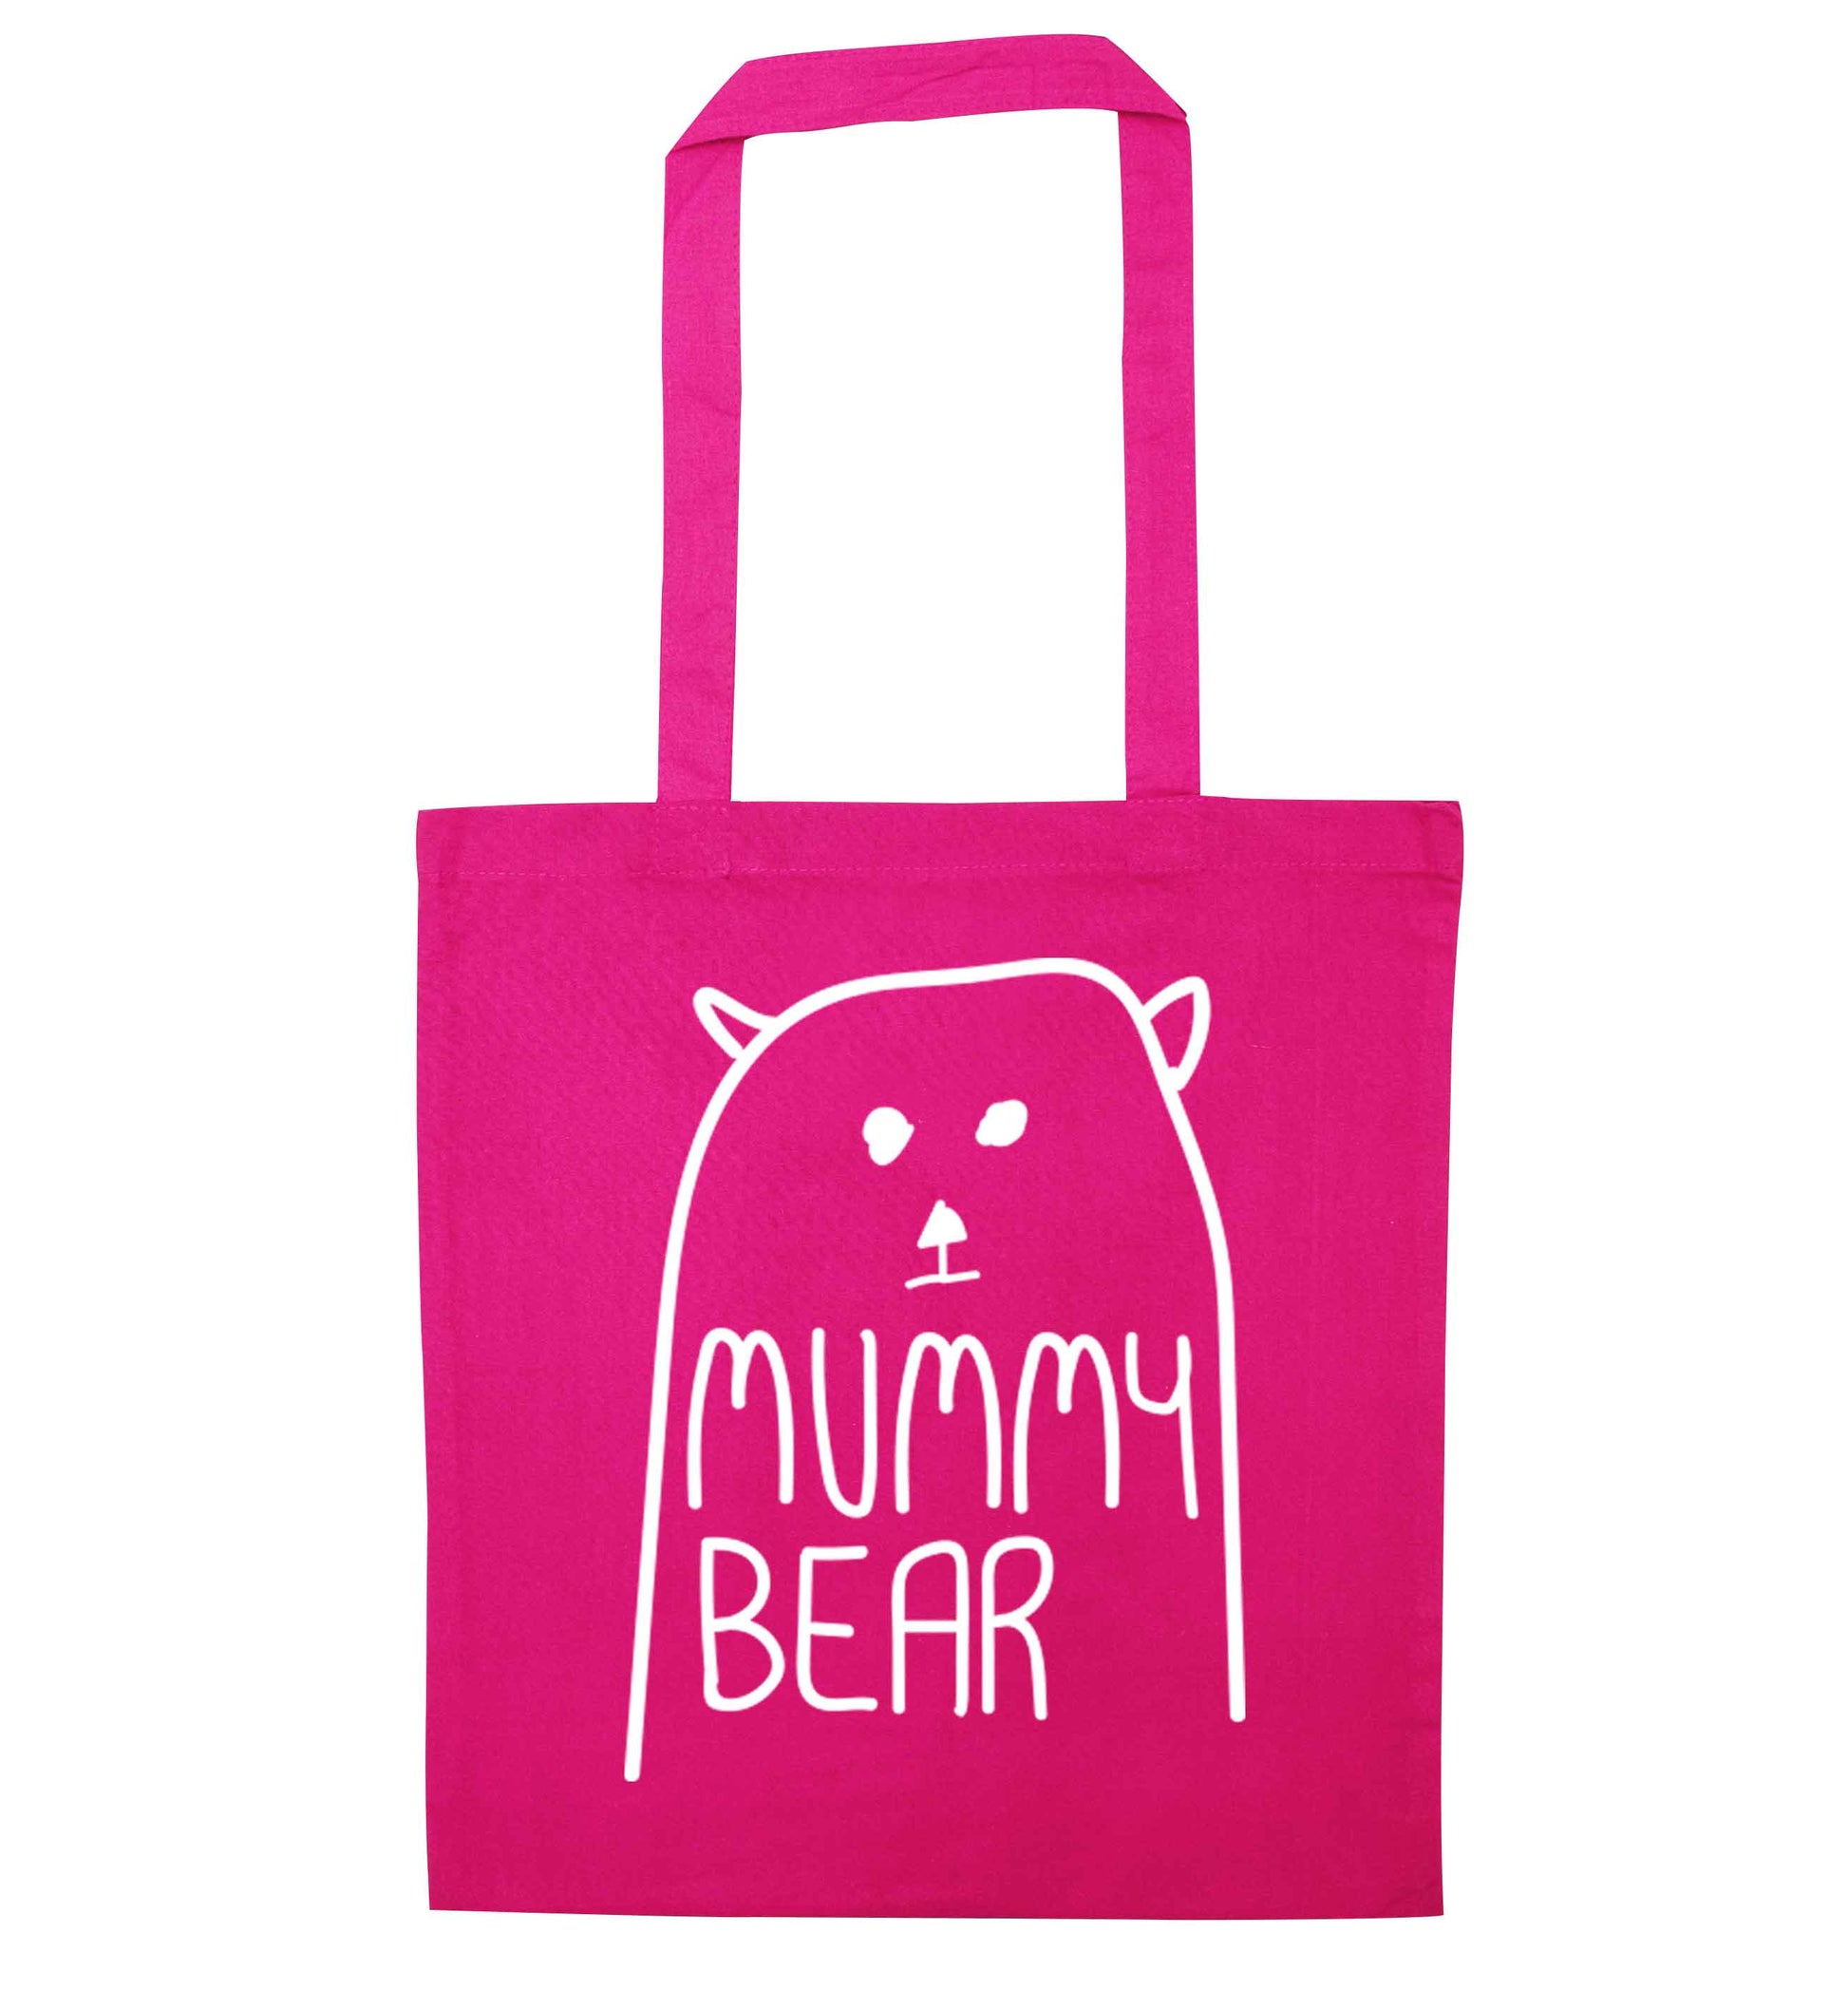 Mummy bear pink tote bag